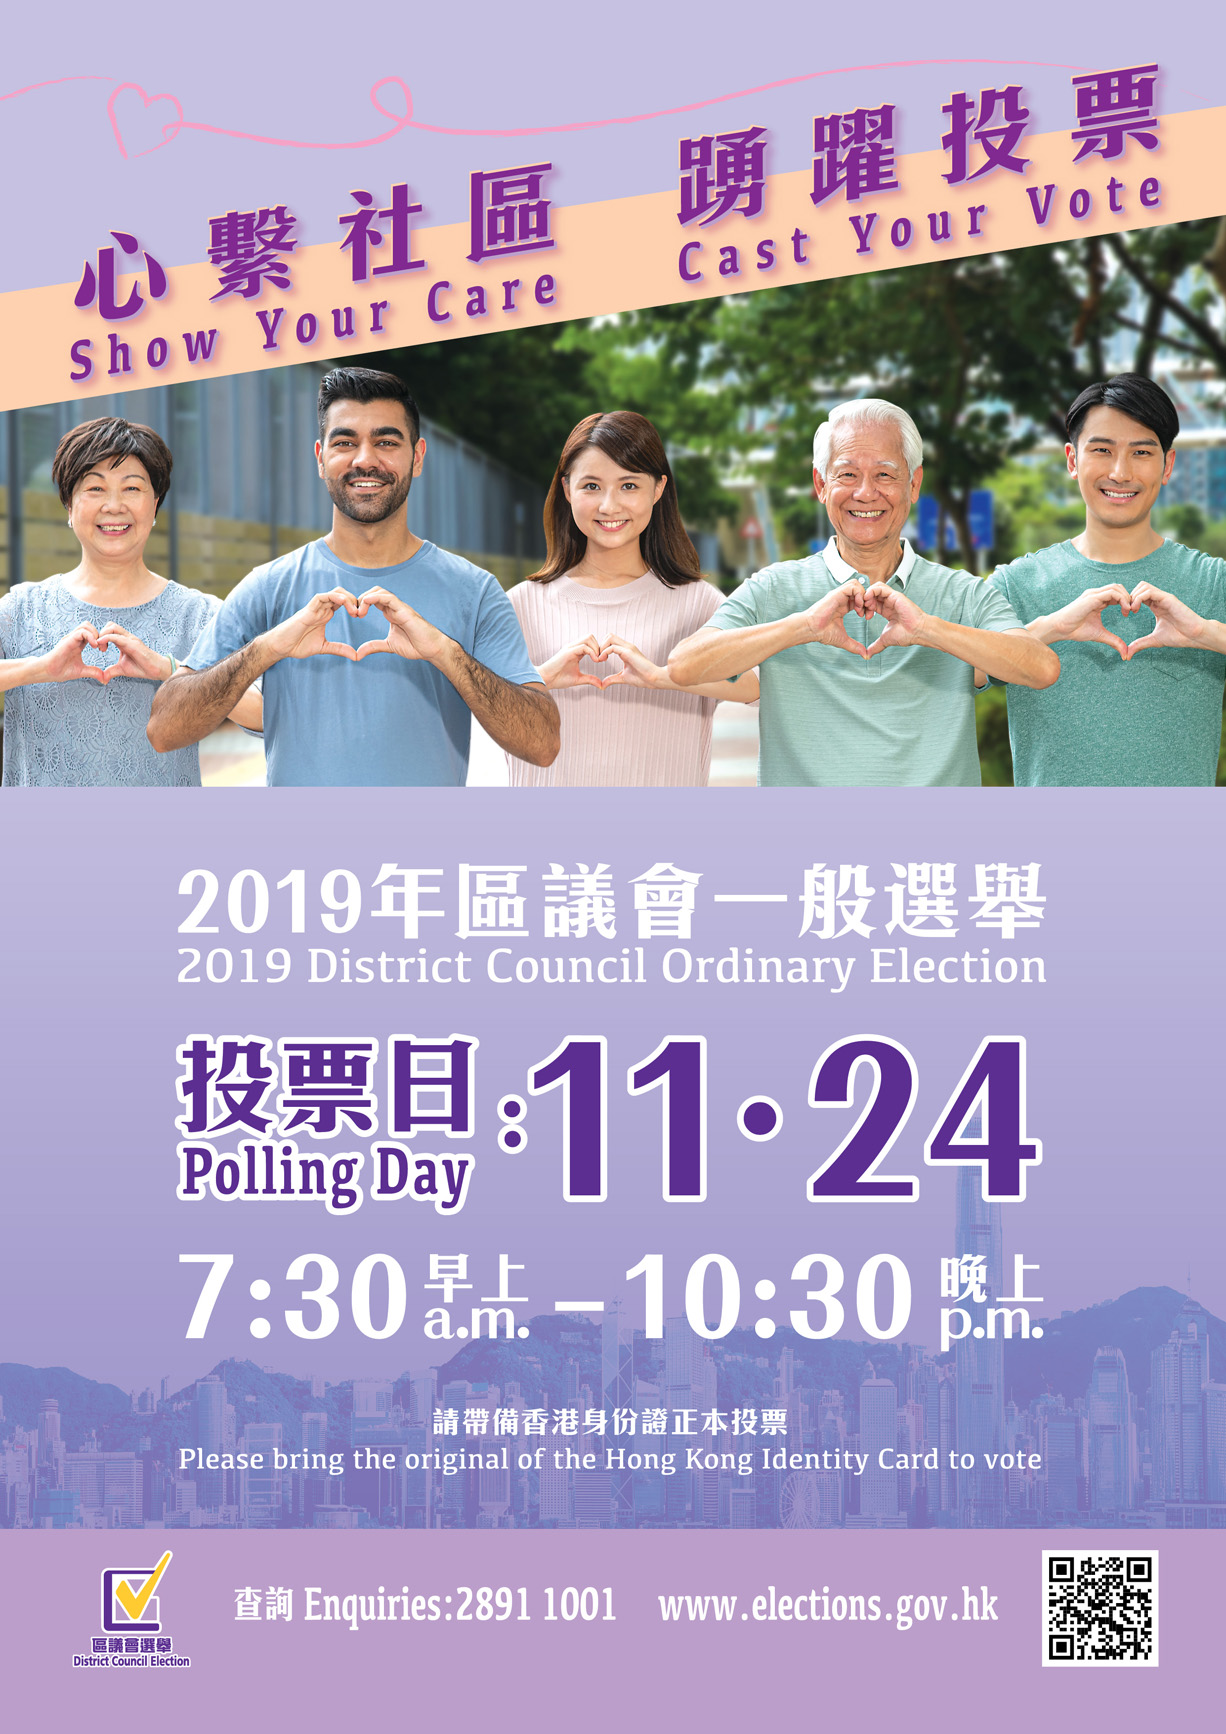 2019年區議會一般選舉海報 2019 District Council Ordinary Election Poster